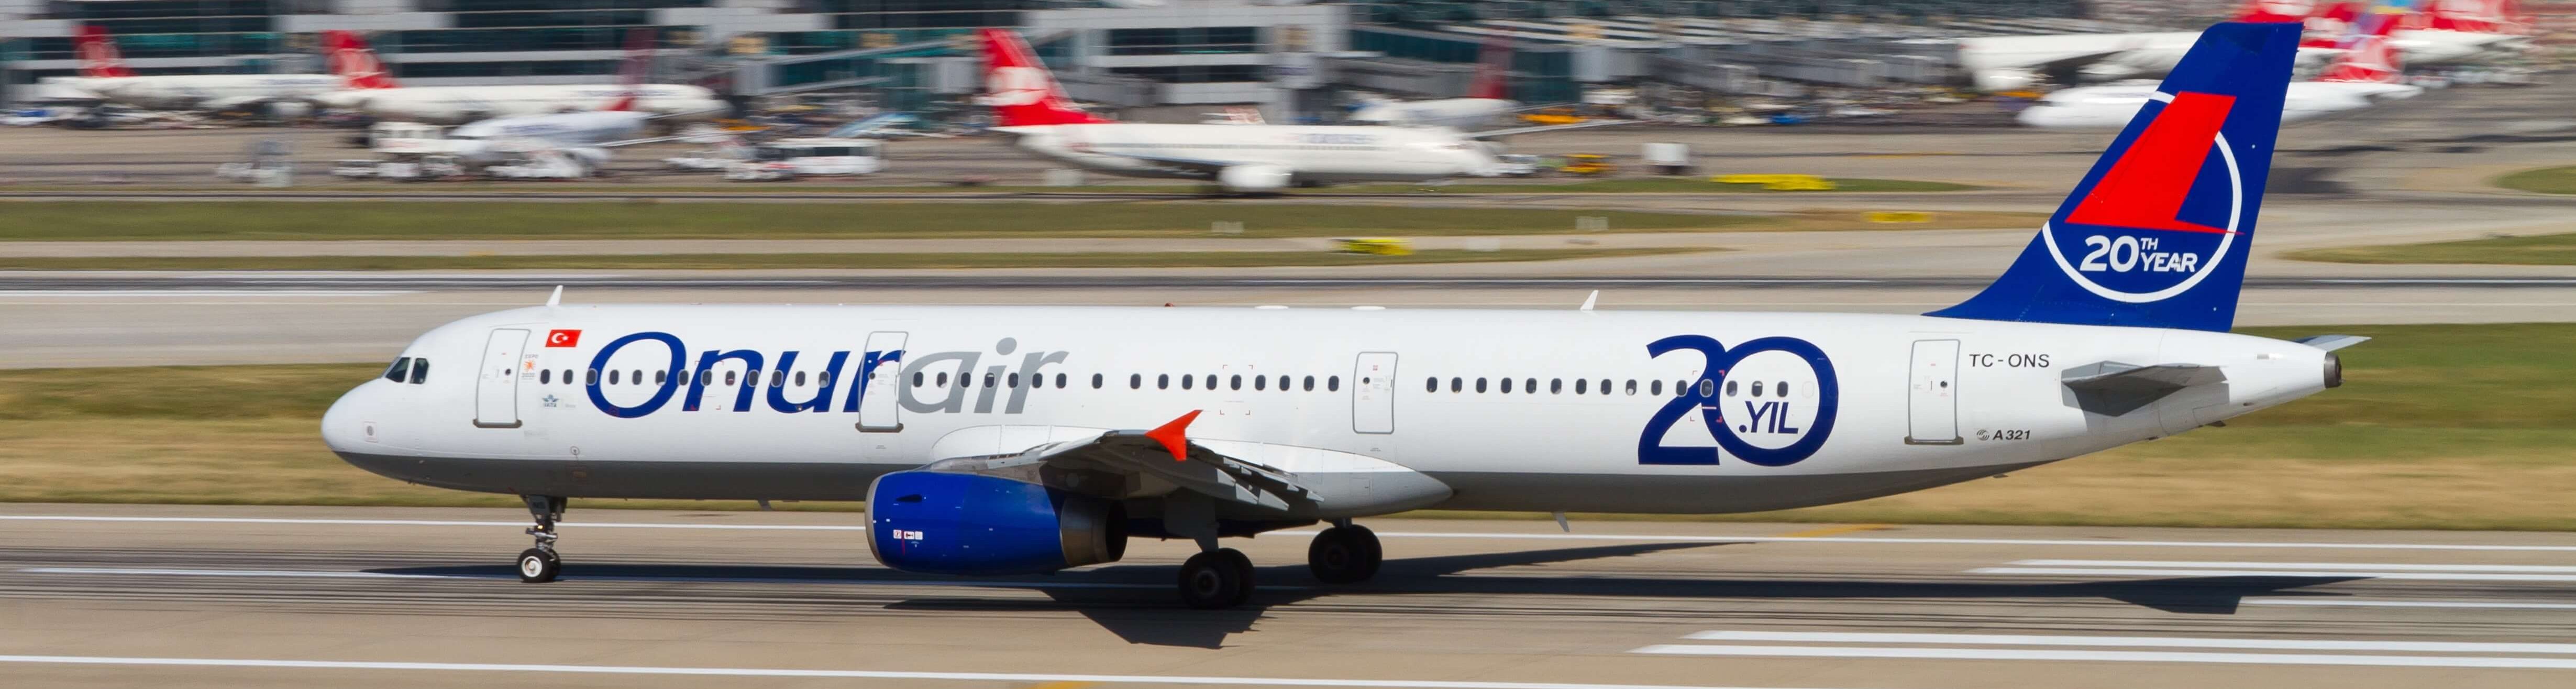 Vallair leases three Airbus A321s to Onur Air in Turkey